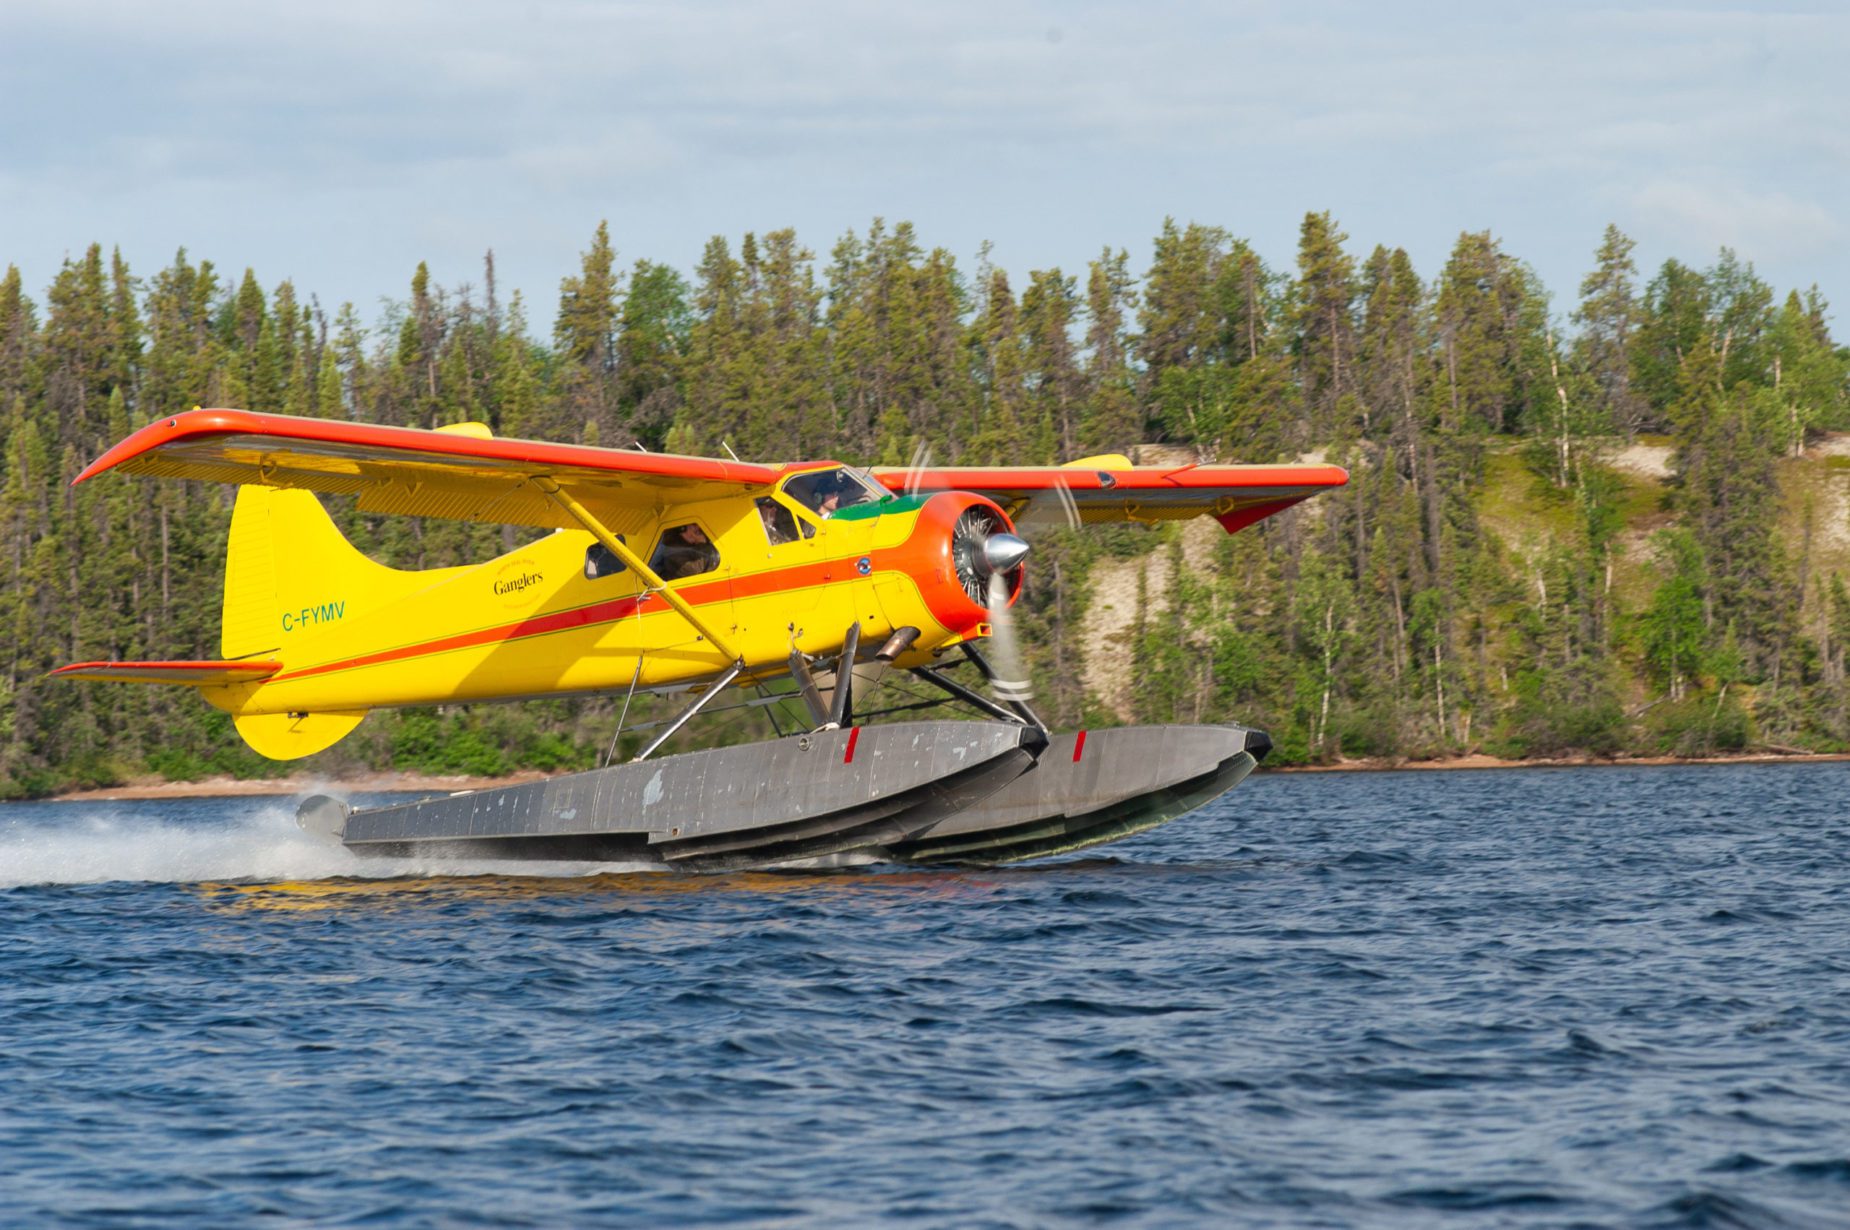 Gangler's yellow floatplane taking off from water